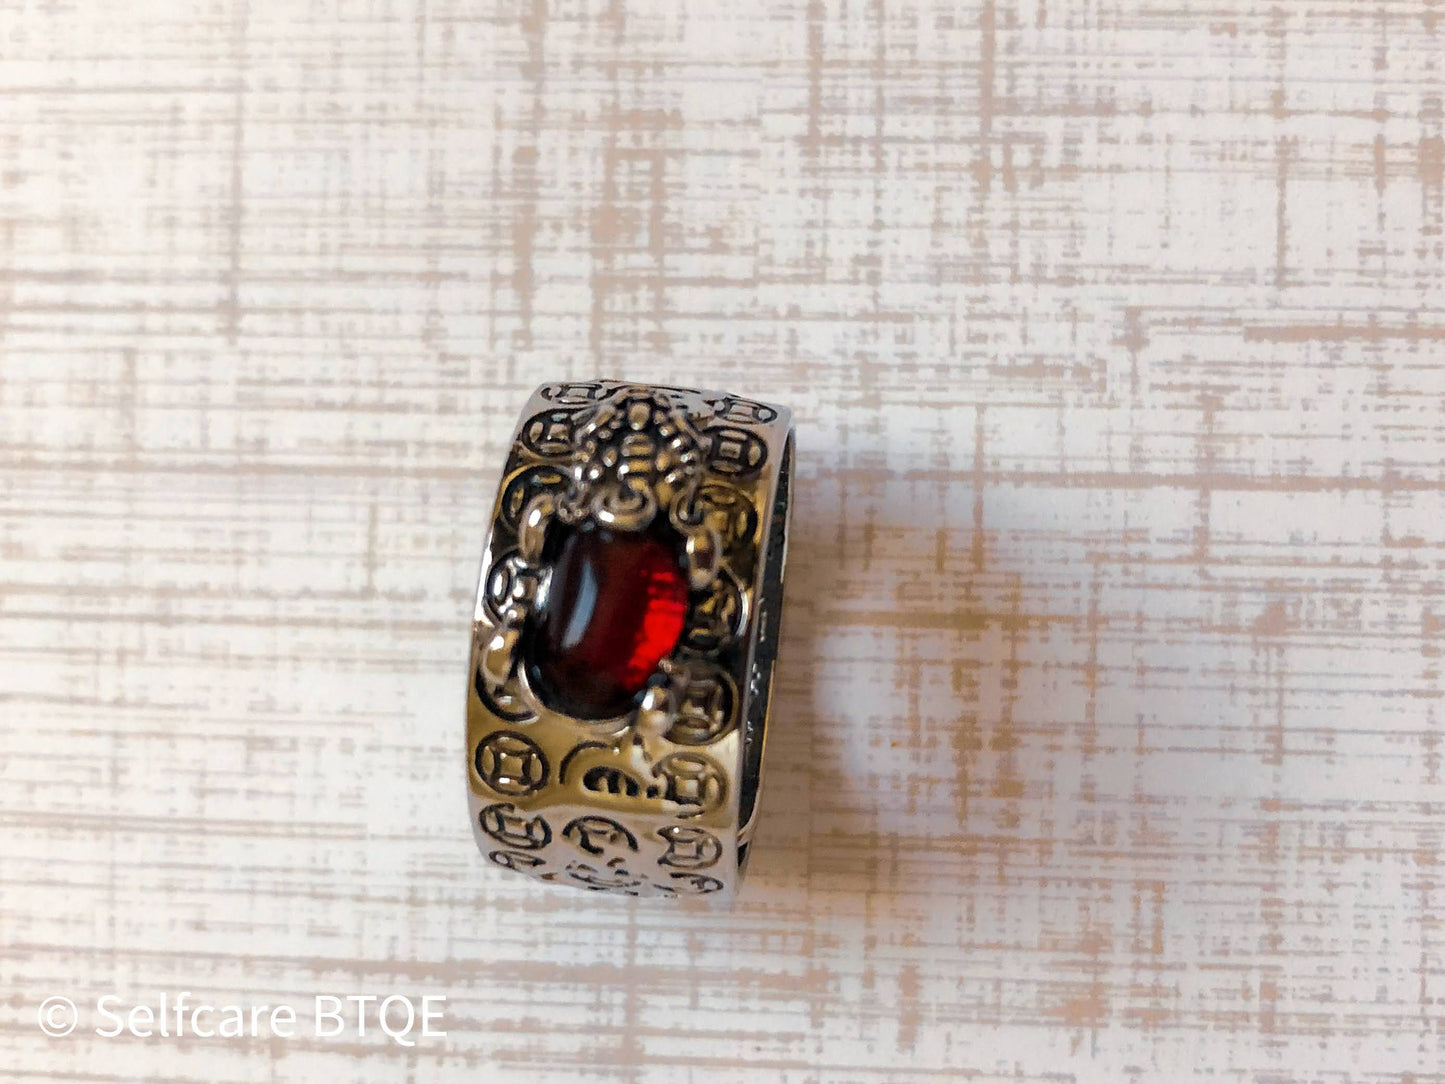 Feng Shui Pixiu Mantra Red Garnet Stone Ring